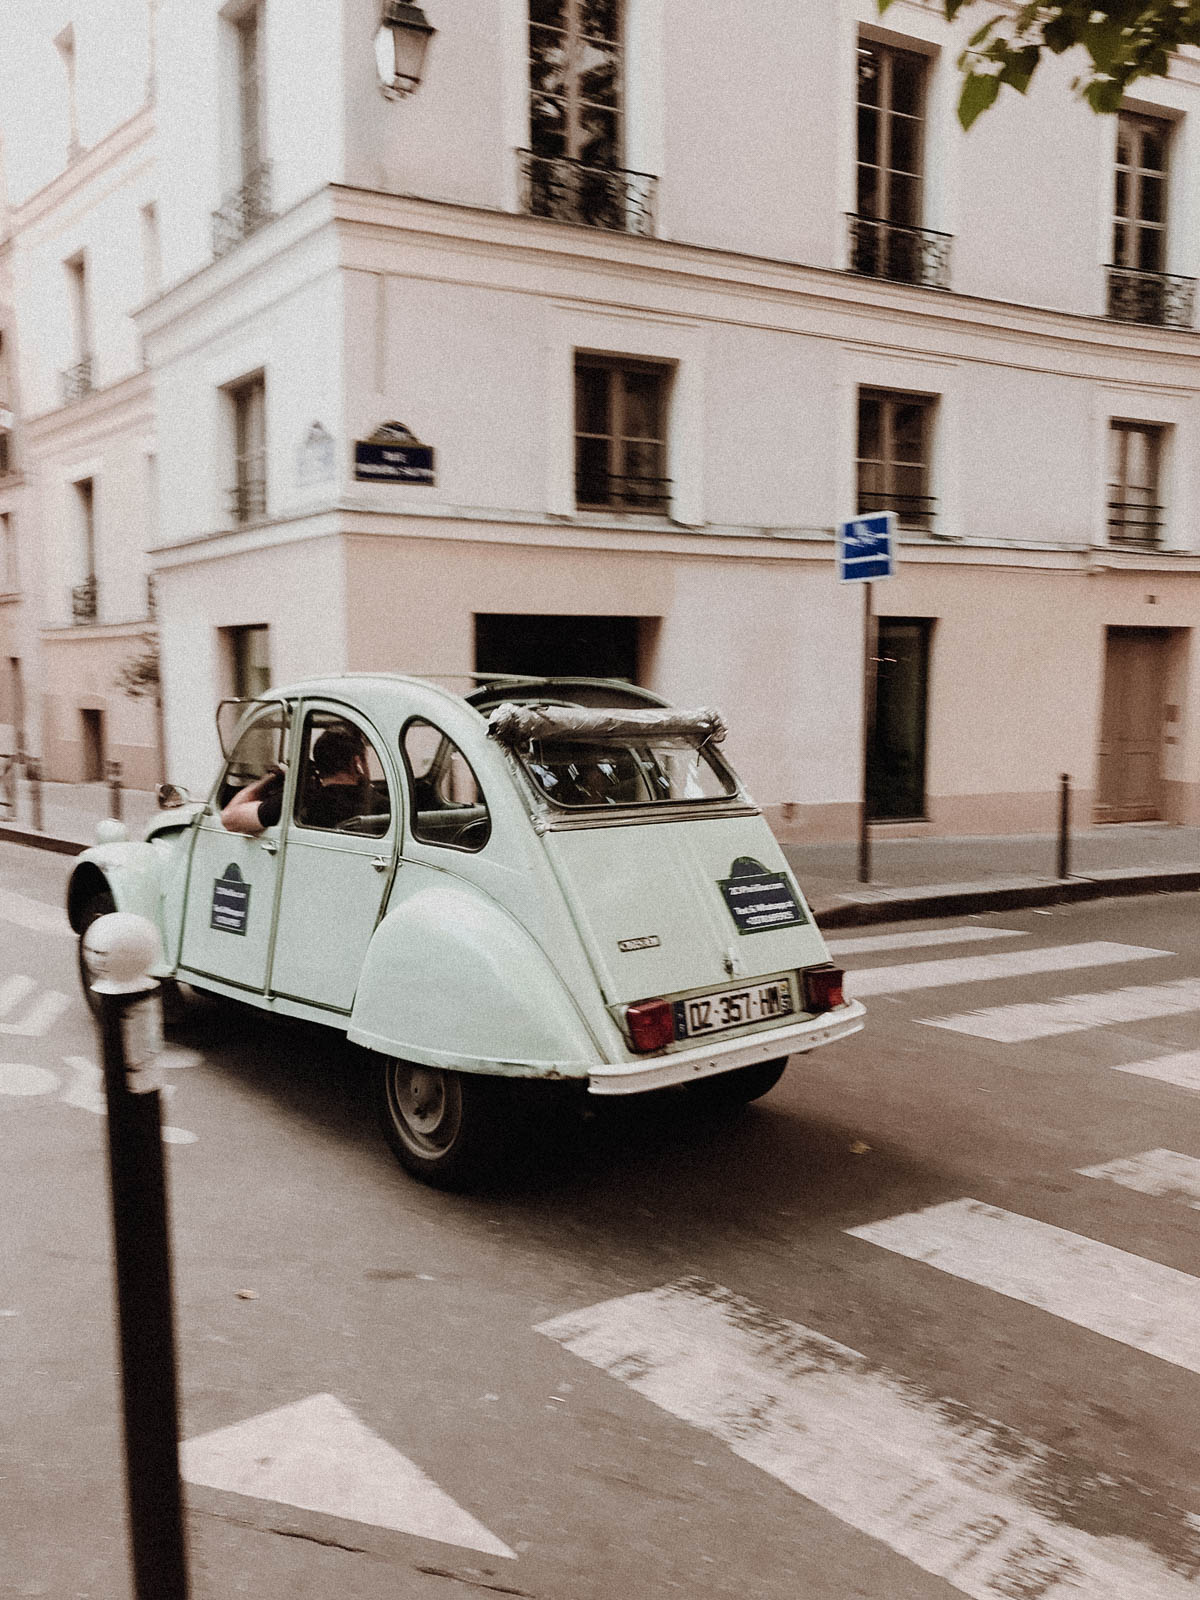 Paris France Travel Guide - Street Photography Vintage Car, European Architecture / RG Daily Blog